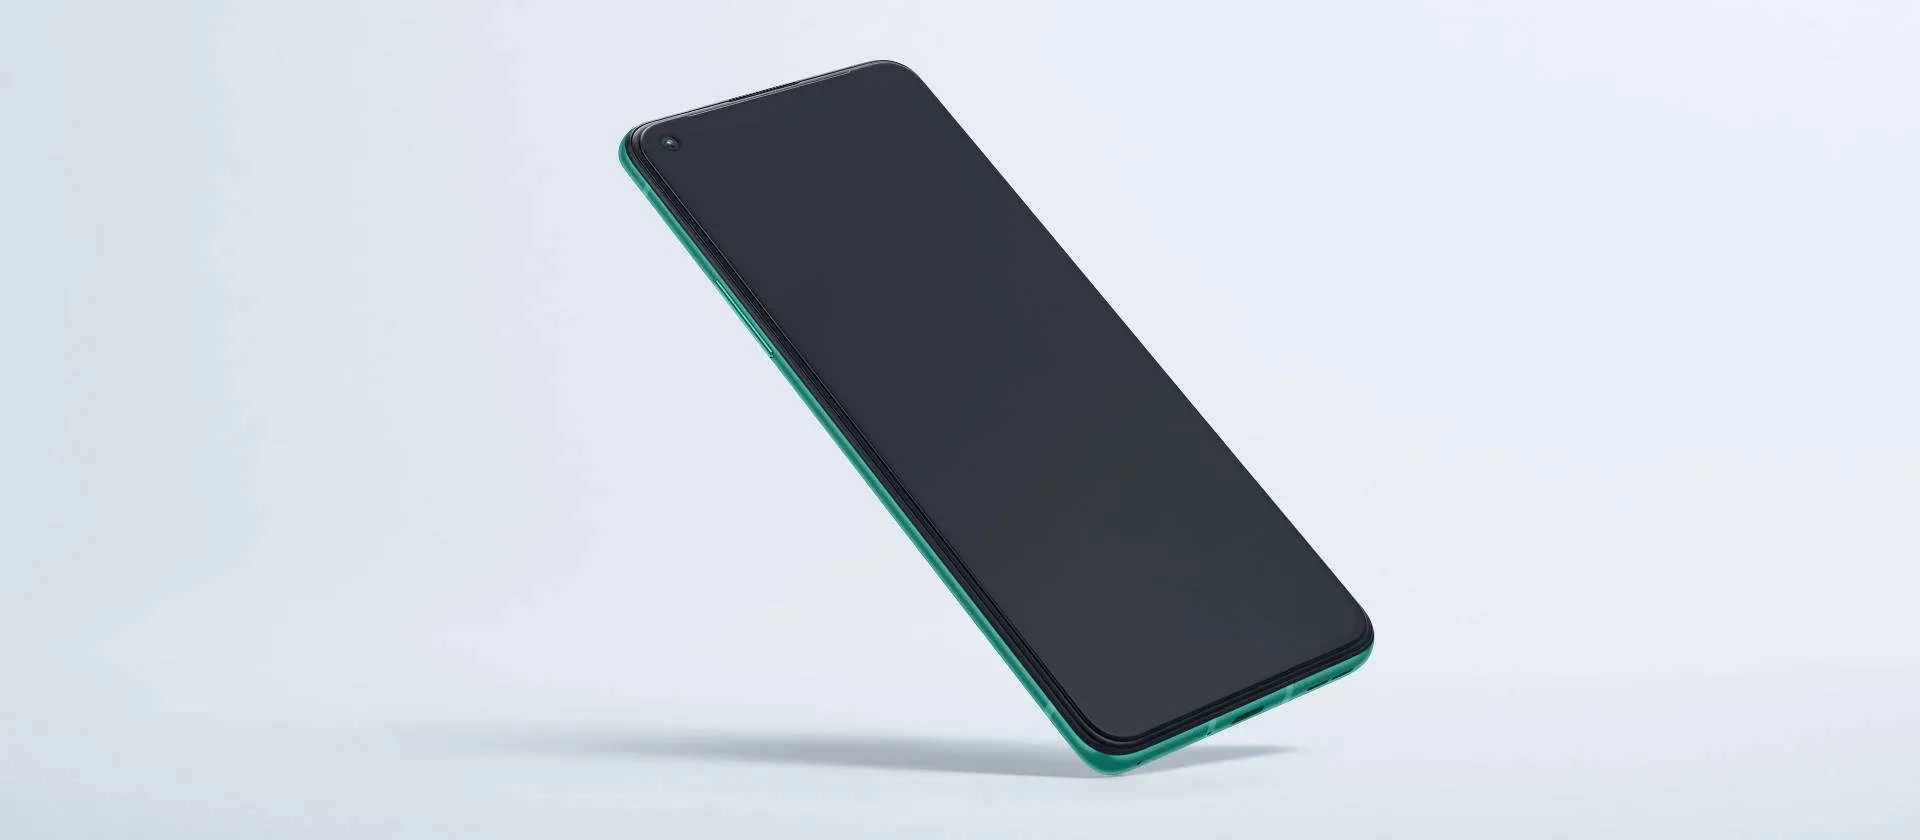 Защитное стекло для OnePlus 8T